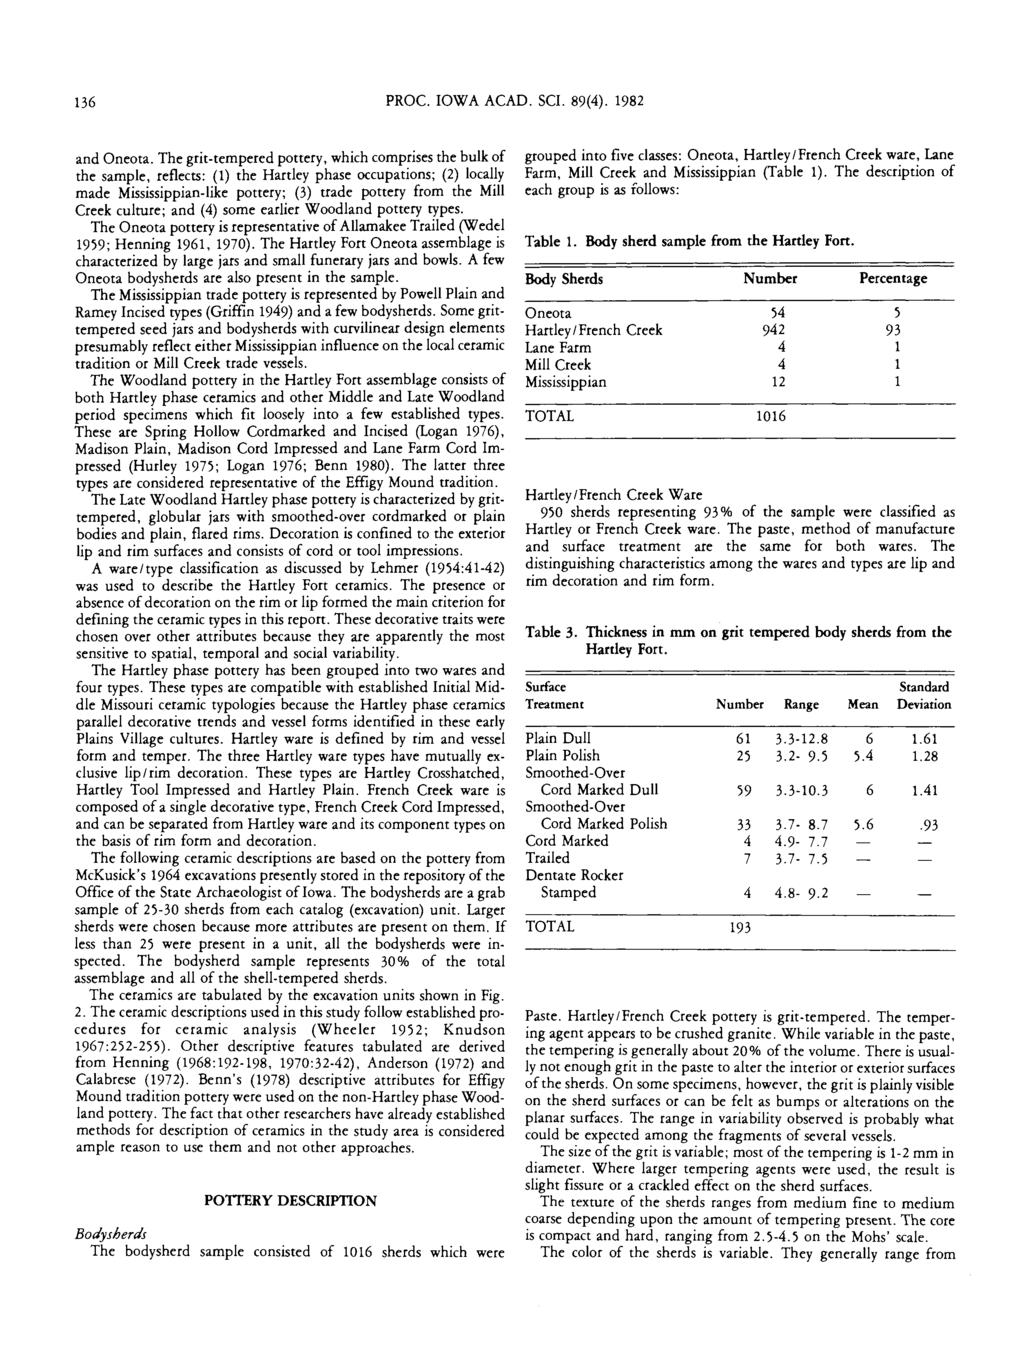 Proceedings of the Iowa Academy of Science, Vol. 89 [1982], No. 4, Art. 3 136 PROC. IOWA ACAD. SCI. 89(4). 1982 and Oneota.